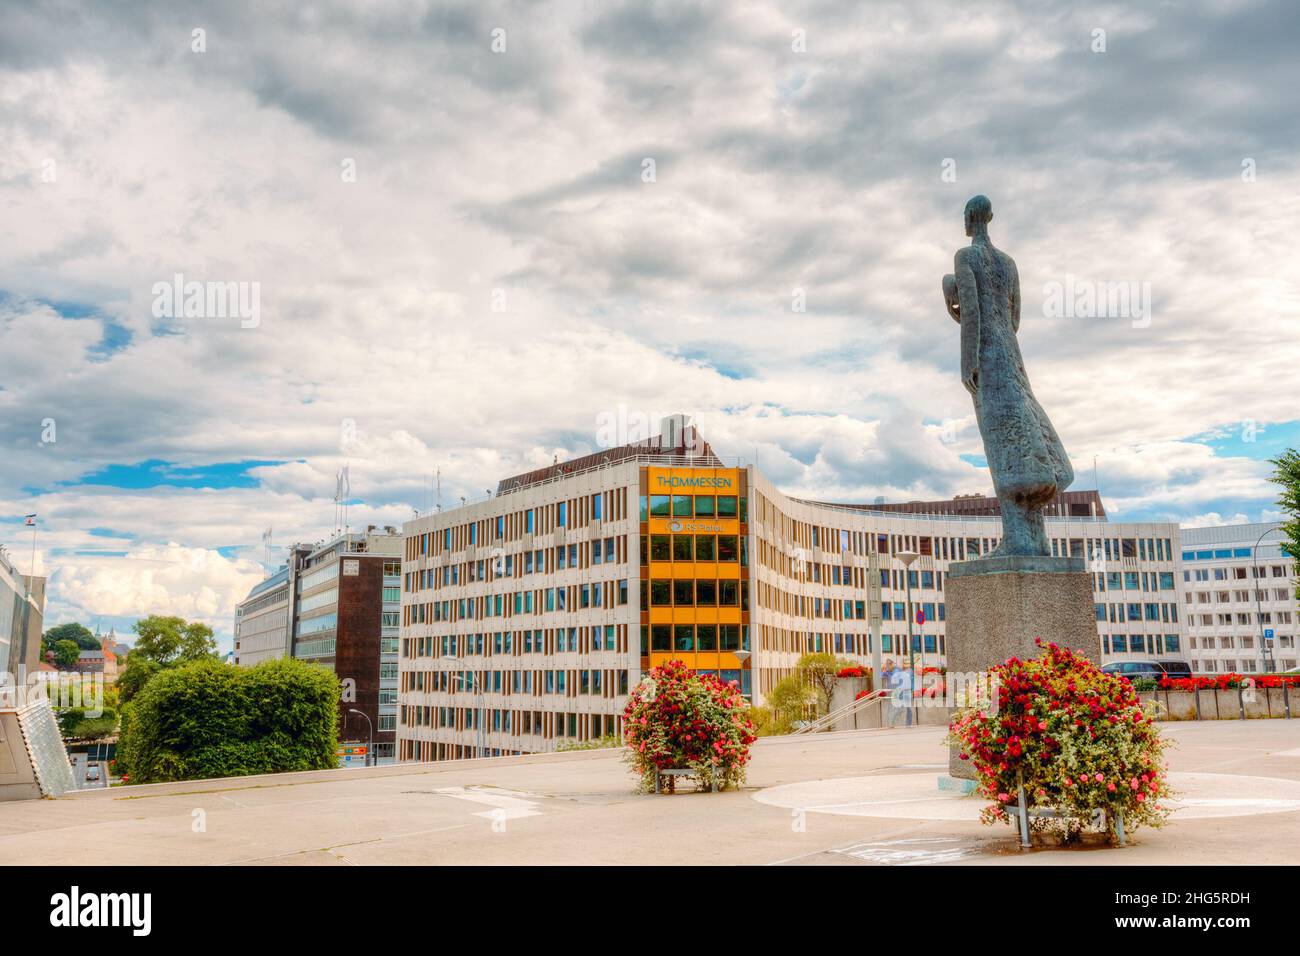 Statue of King Haakon VII in Oslo, Norway Stock Photo